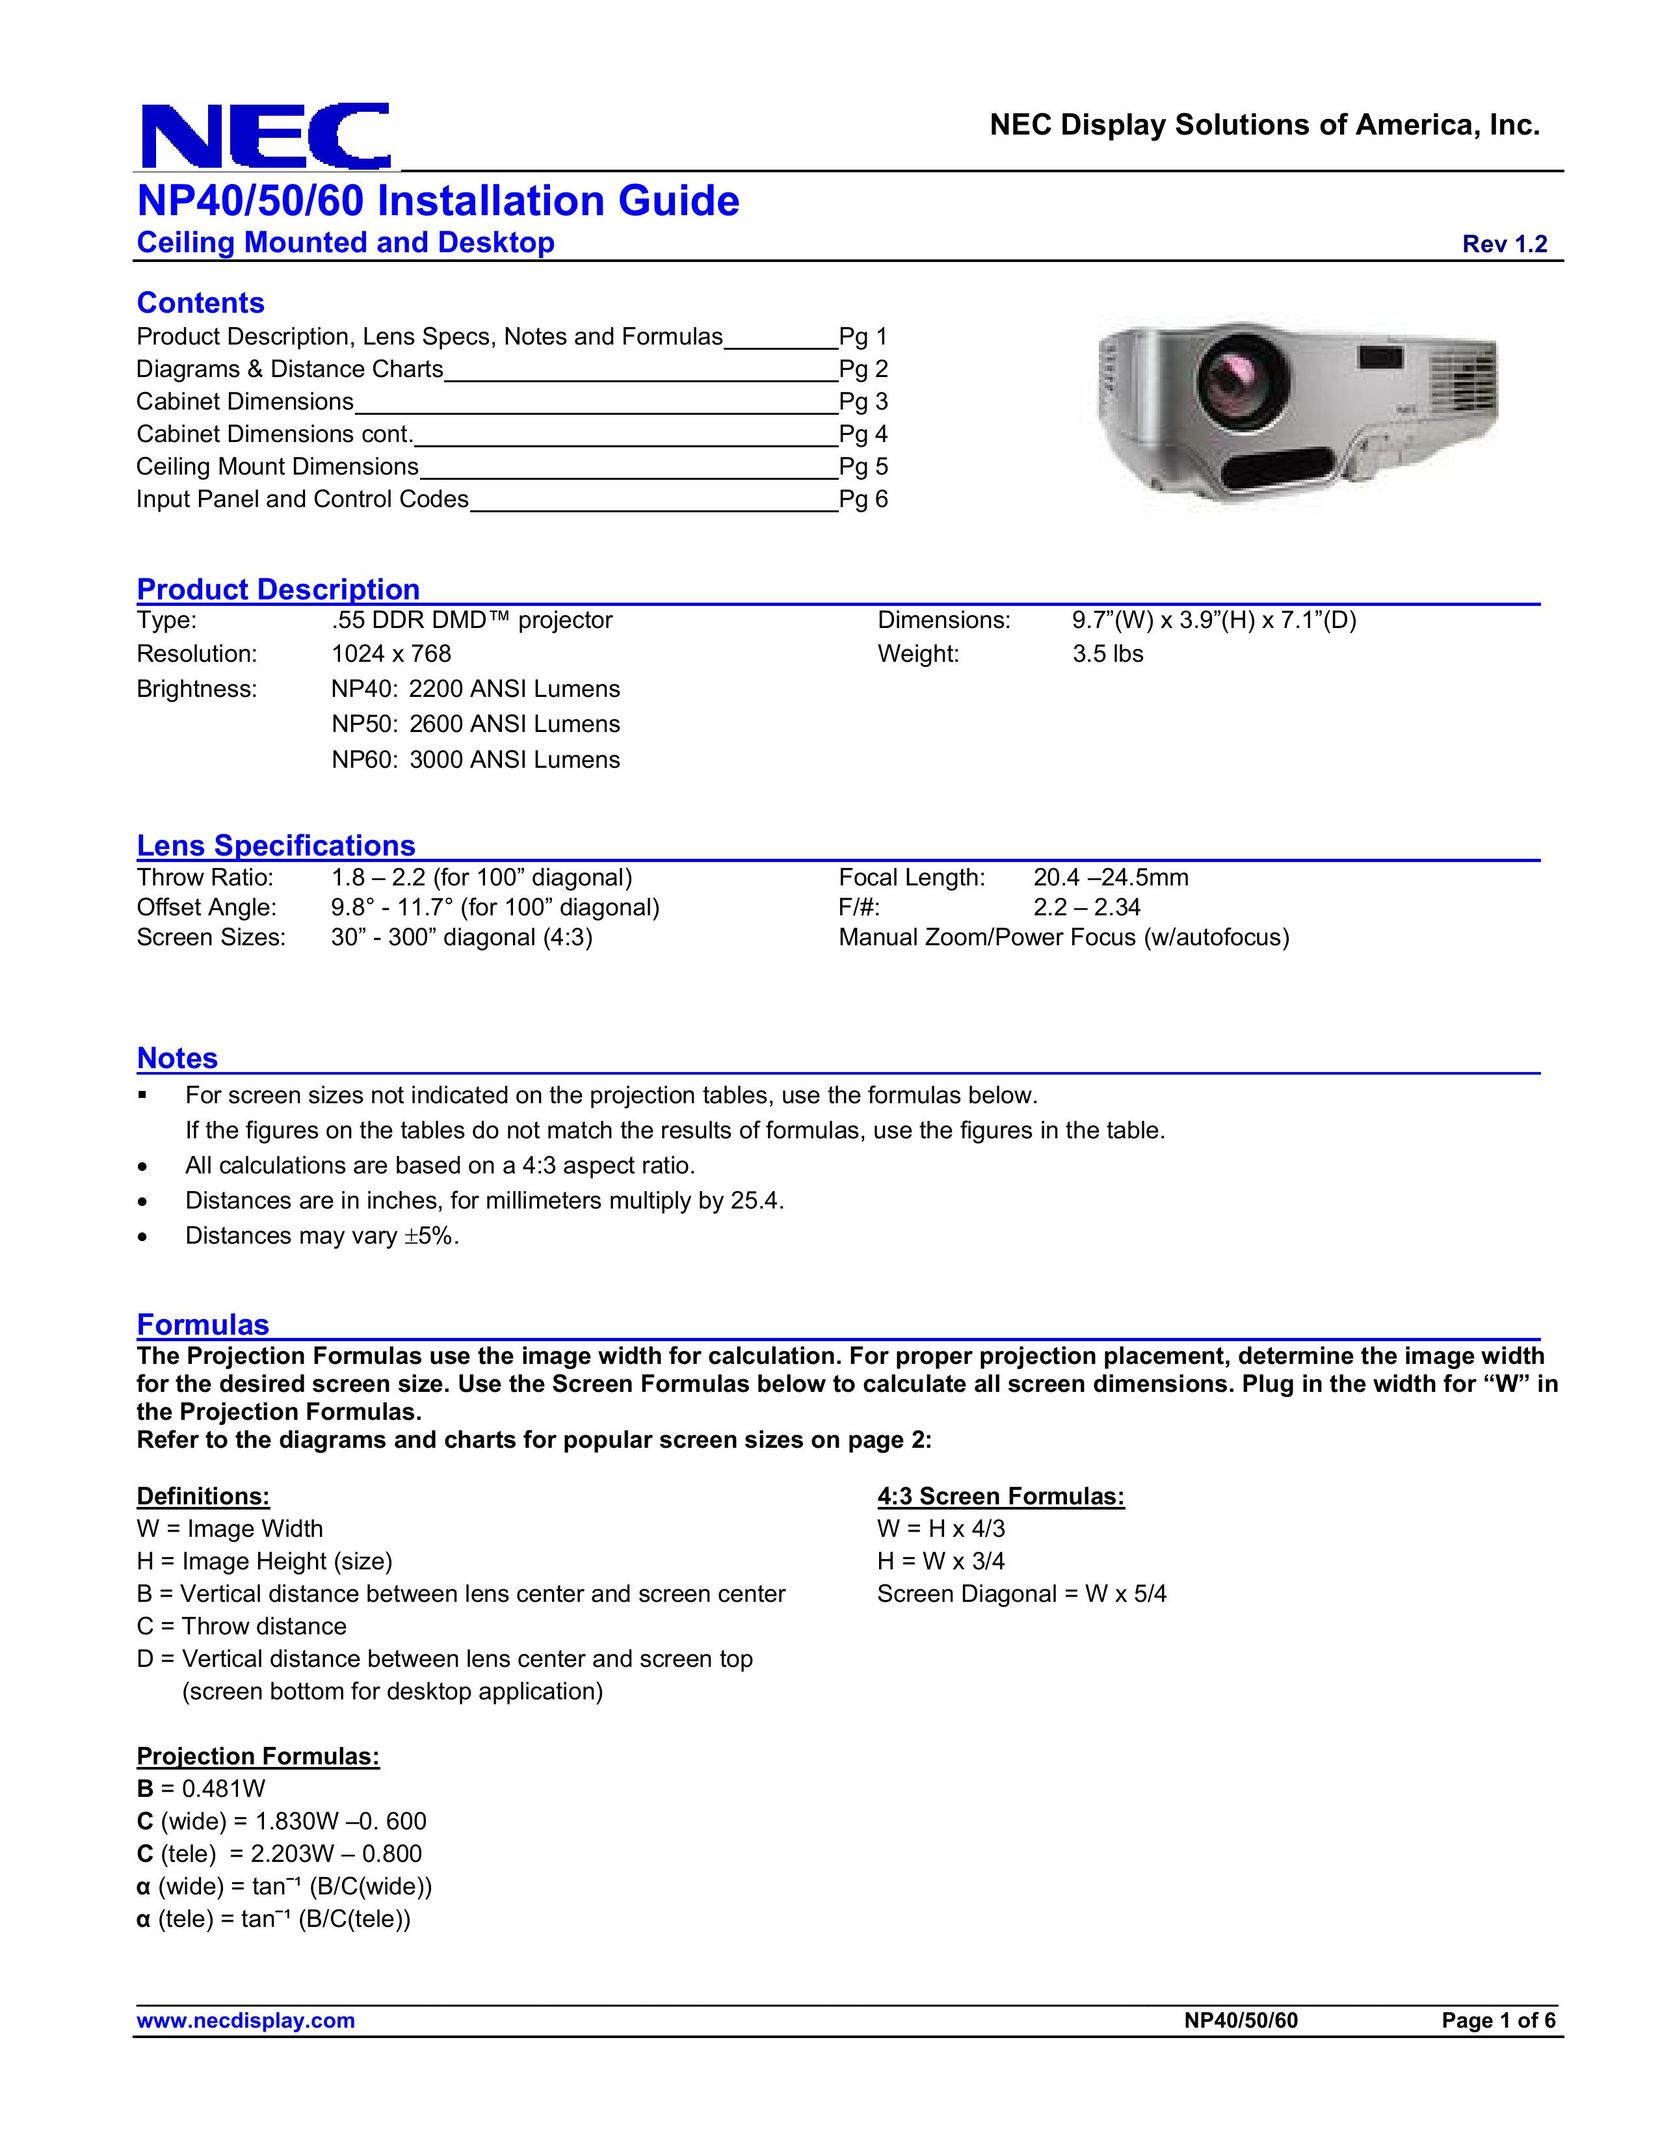 NEC 60 Projector Accessories User Manual